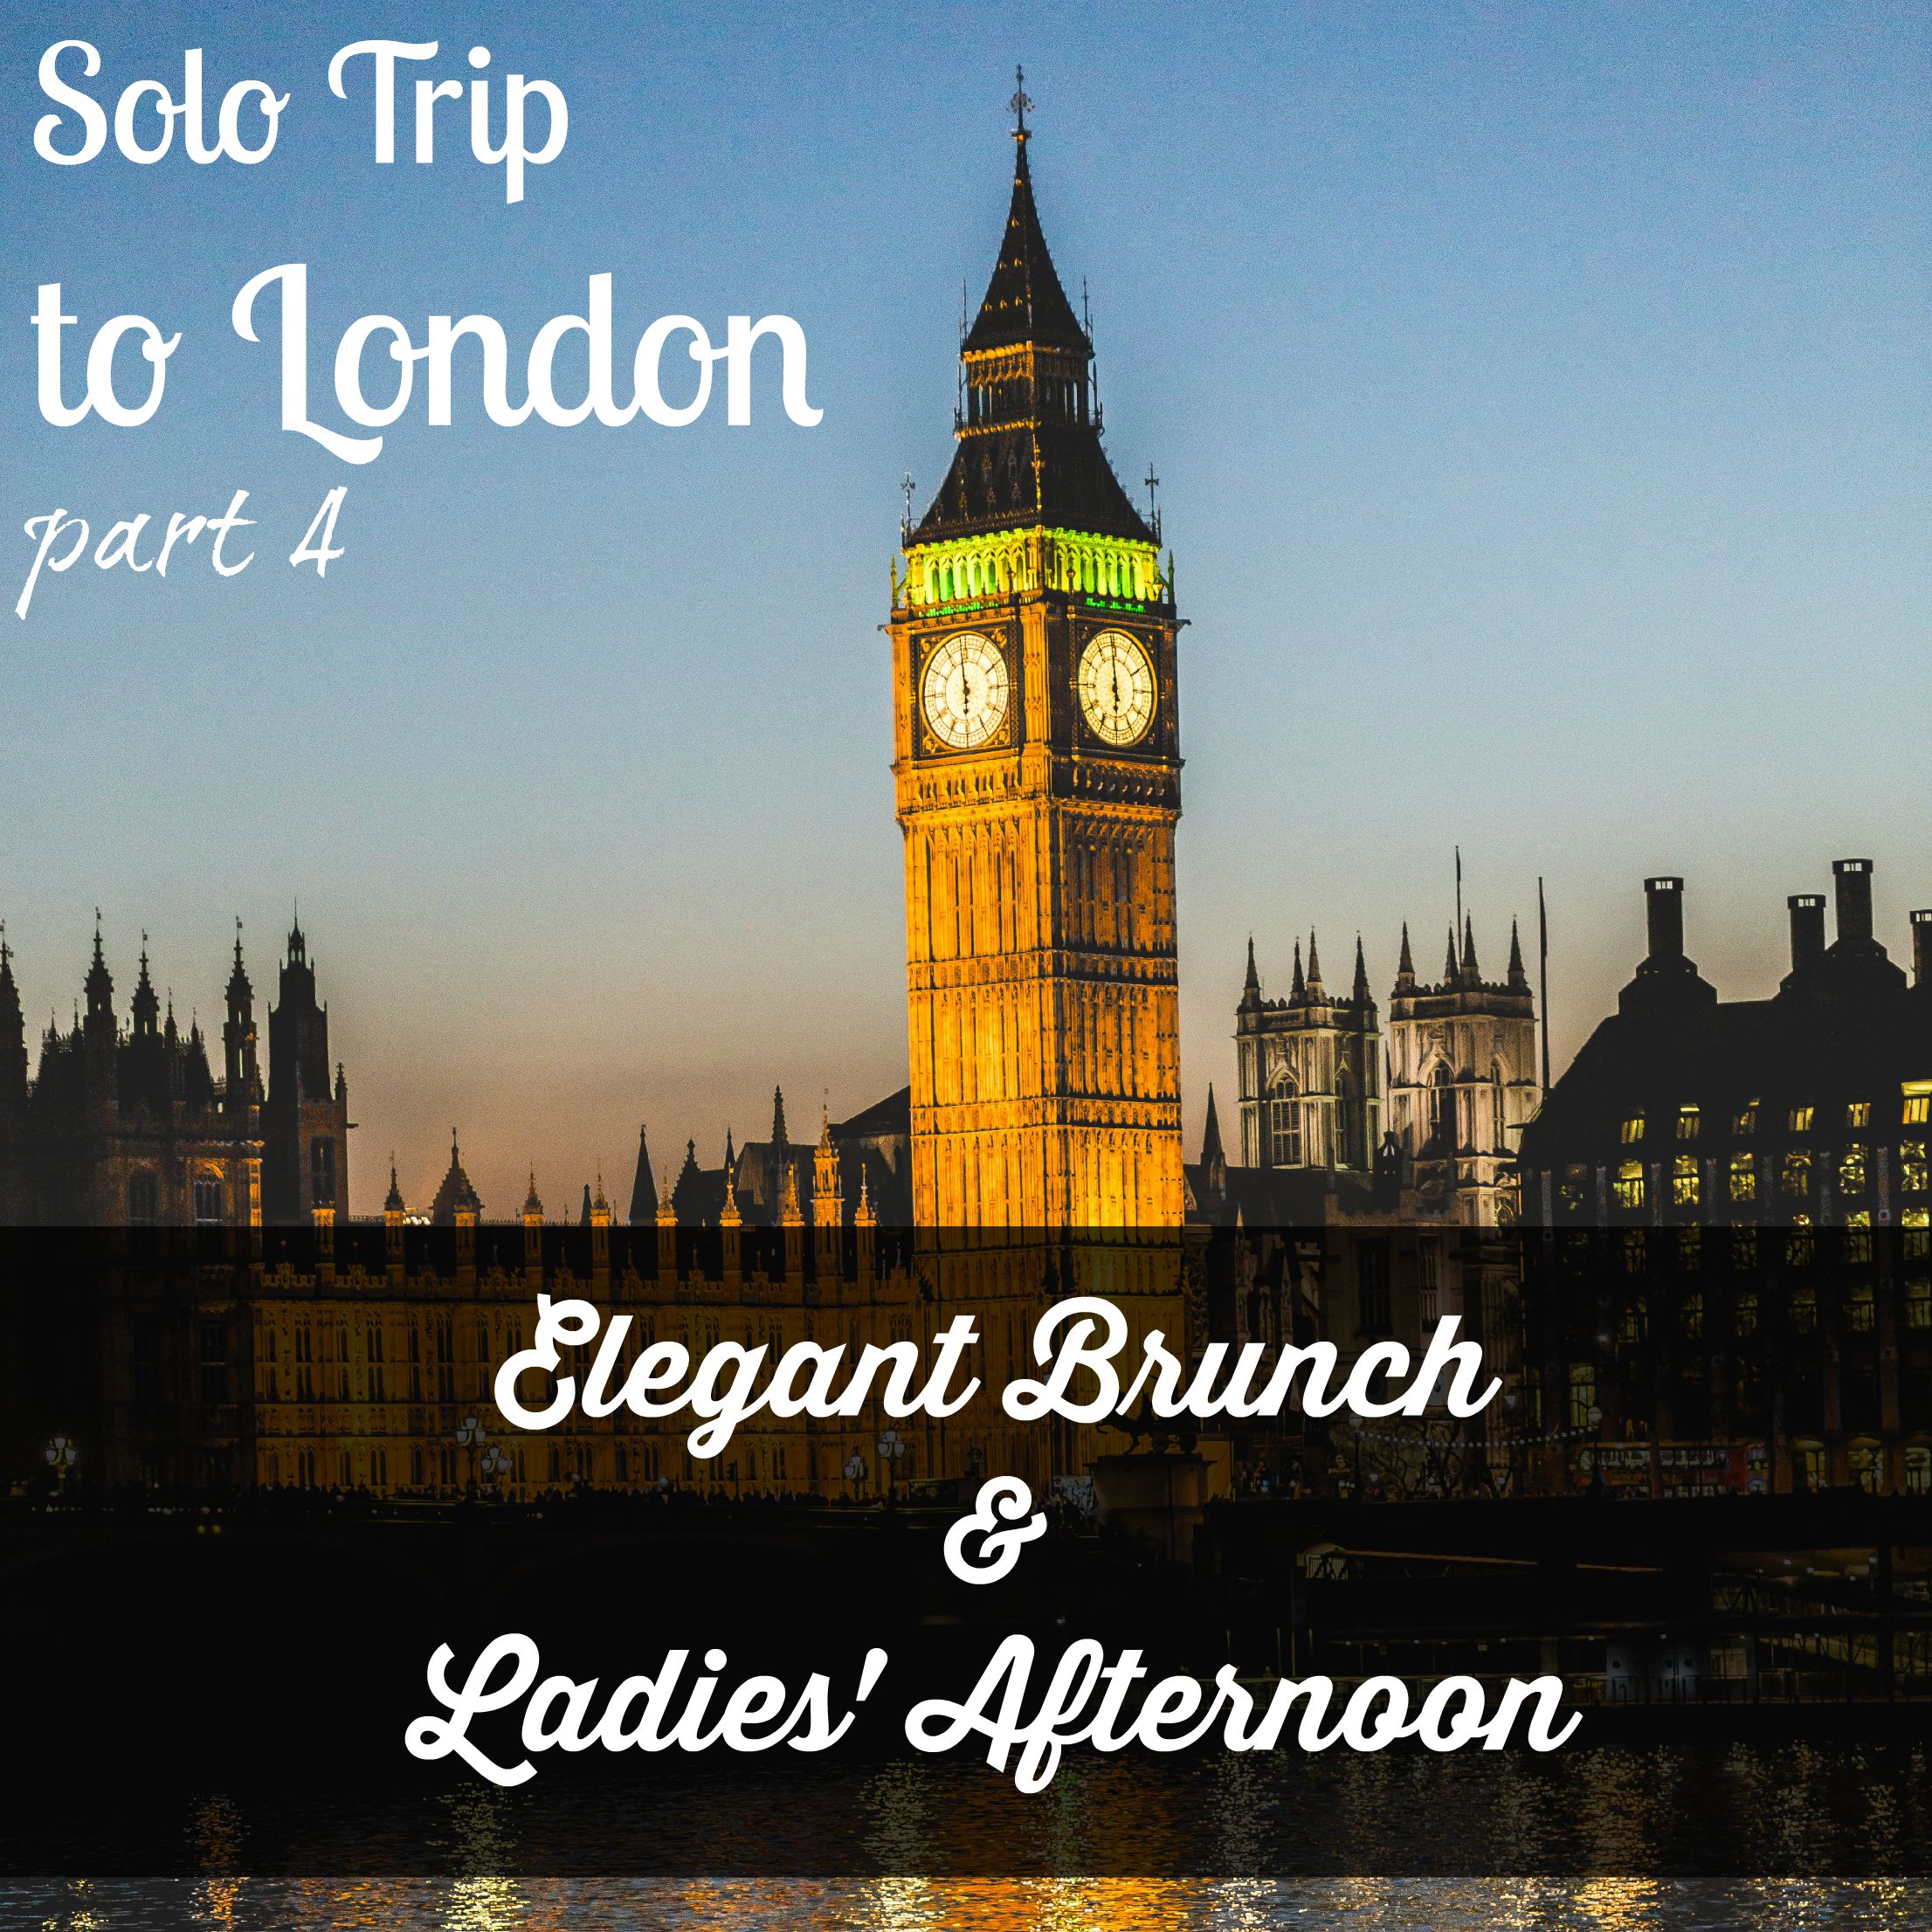 Solo trip to London, part 4 – Elegant Brunch & Ladies’ Afternoon